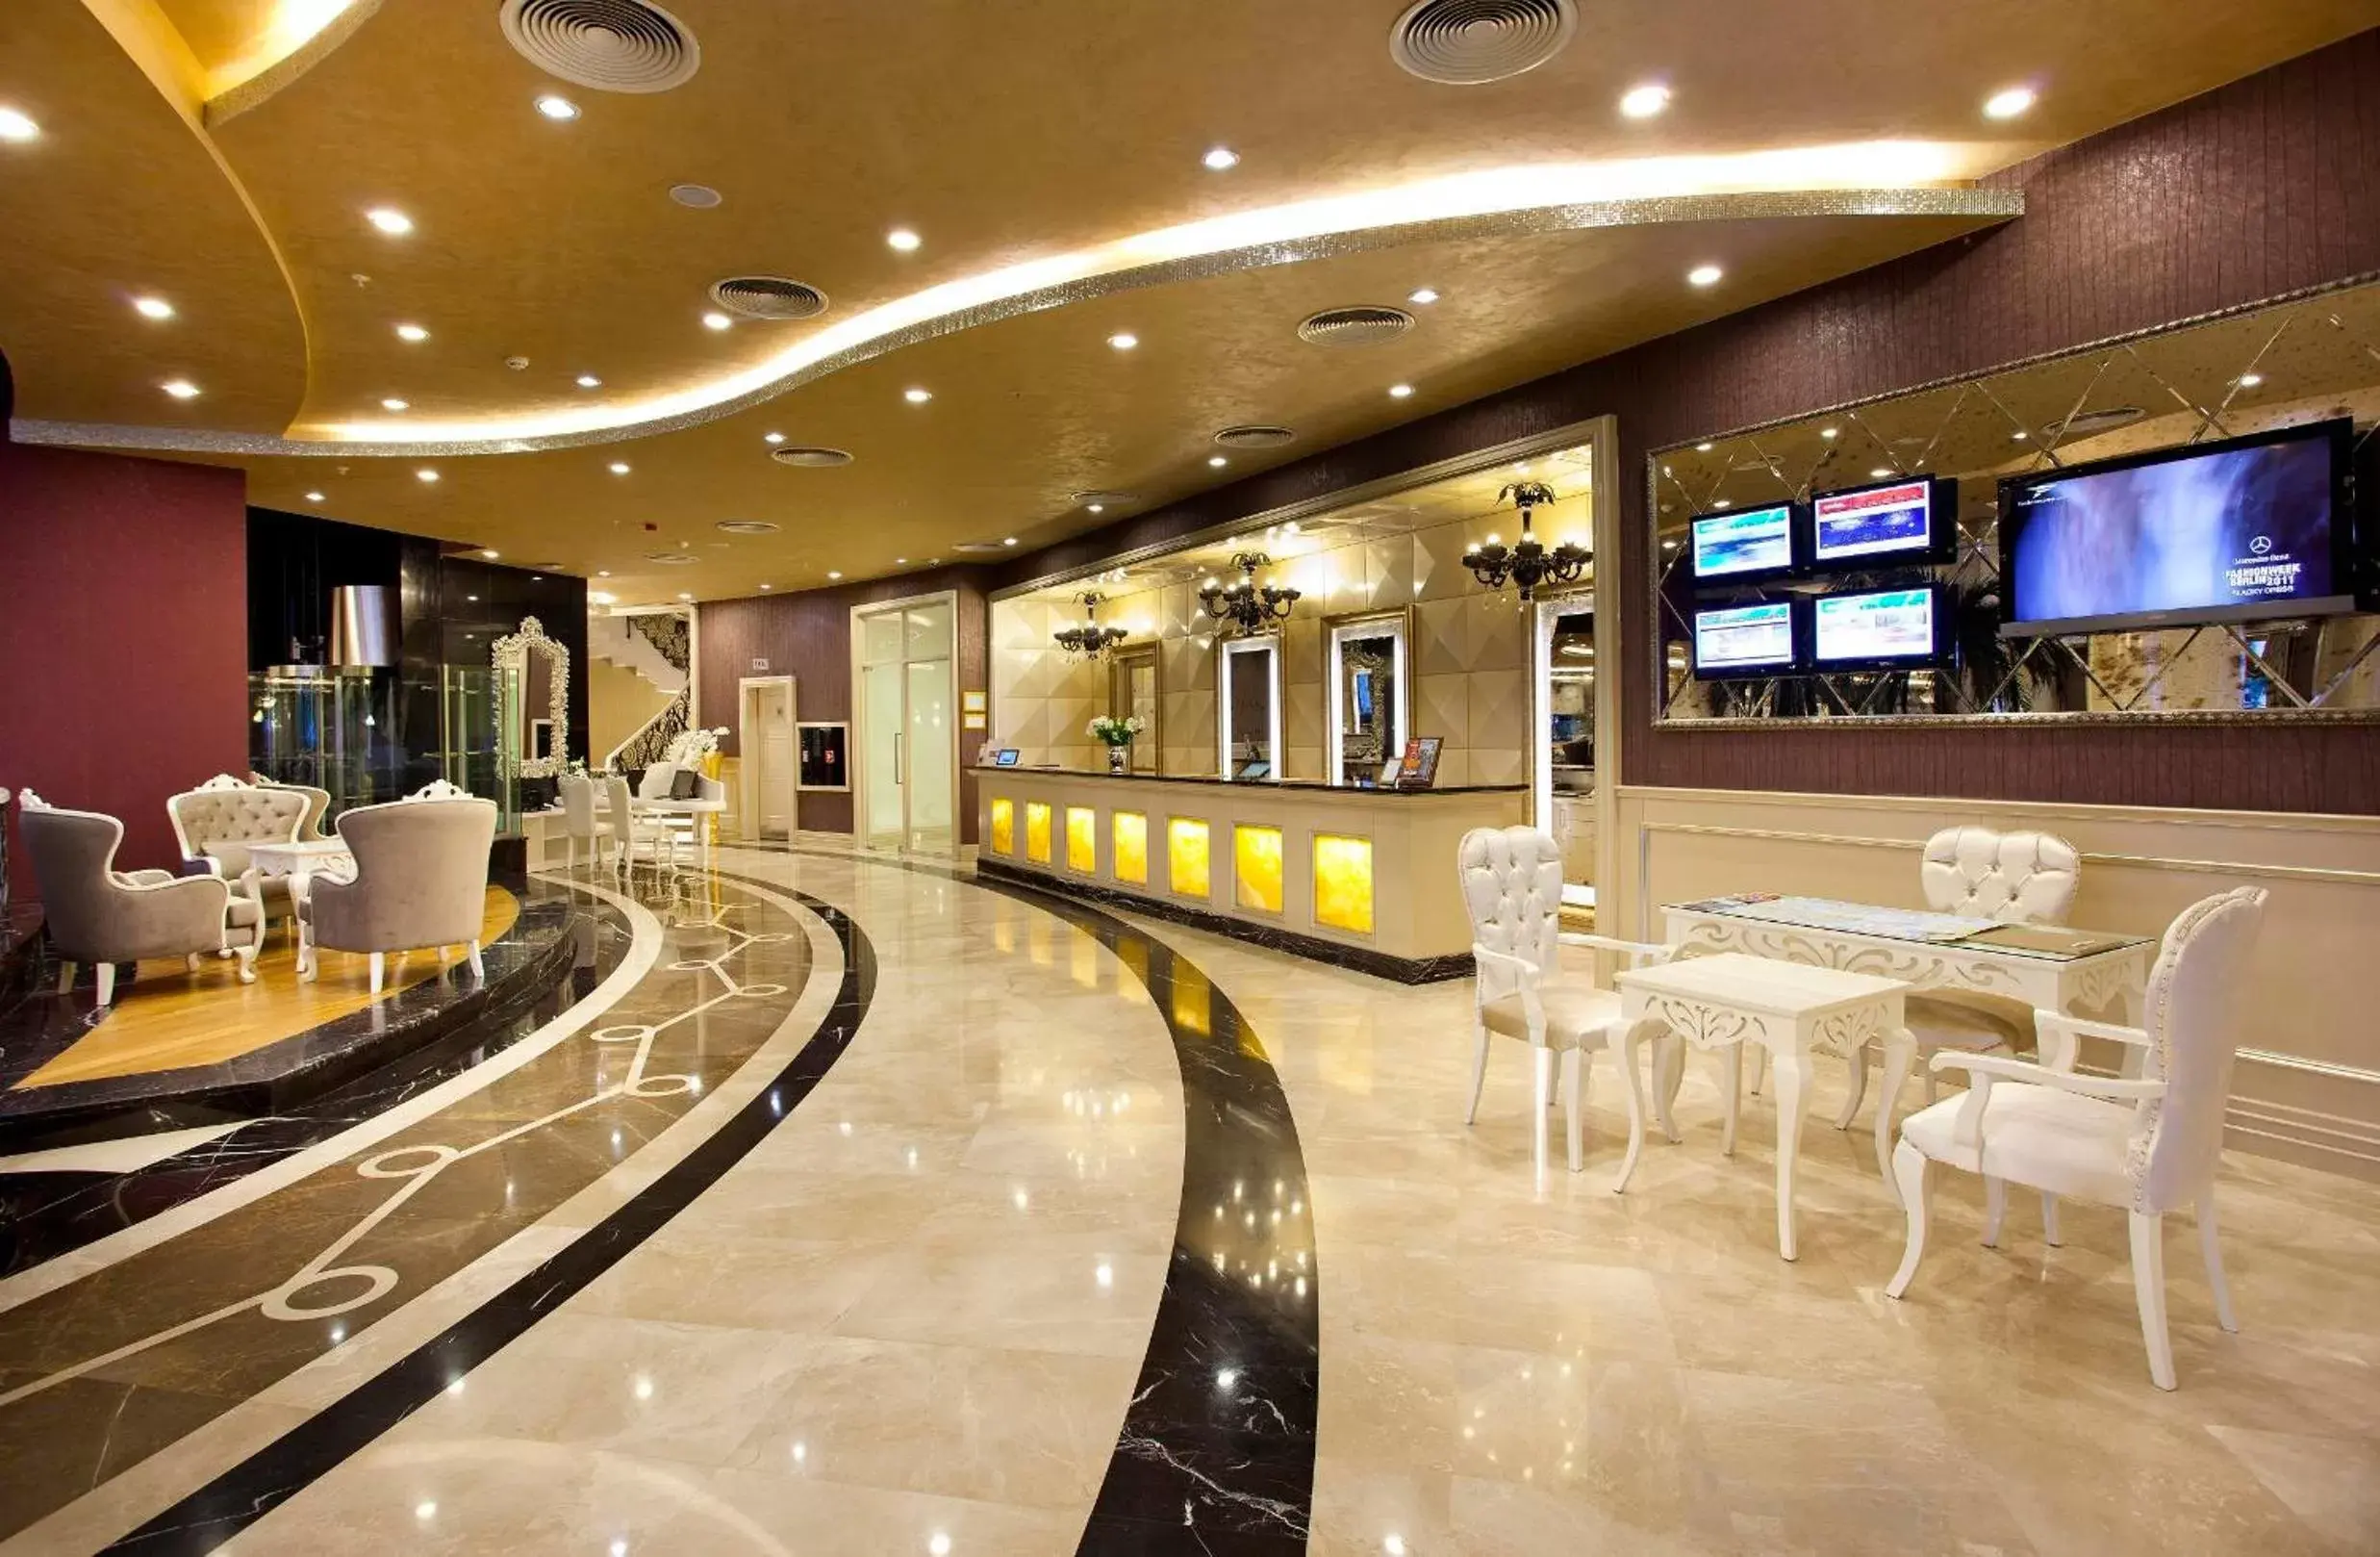 Lobby or reception in Limak Eurasia Luxury Hotel